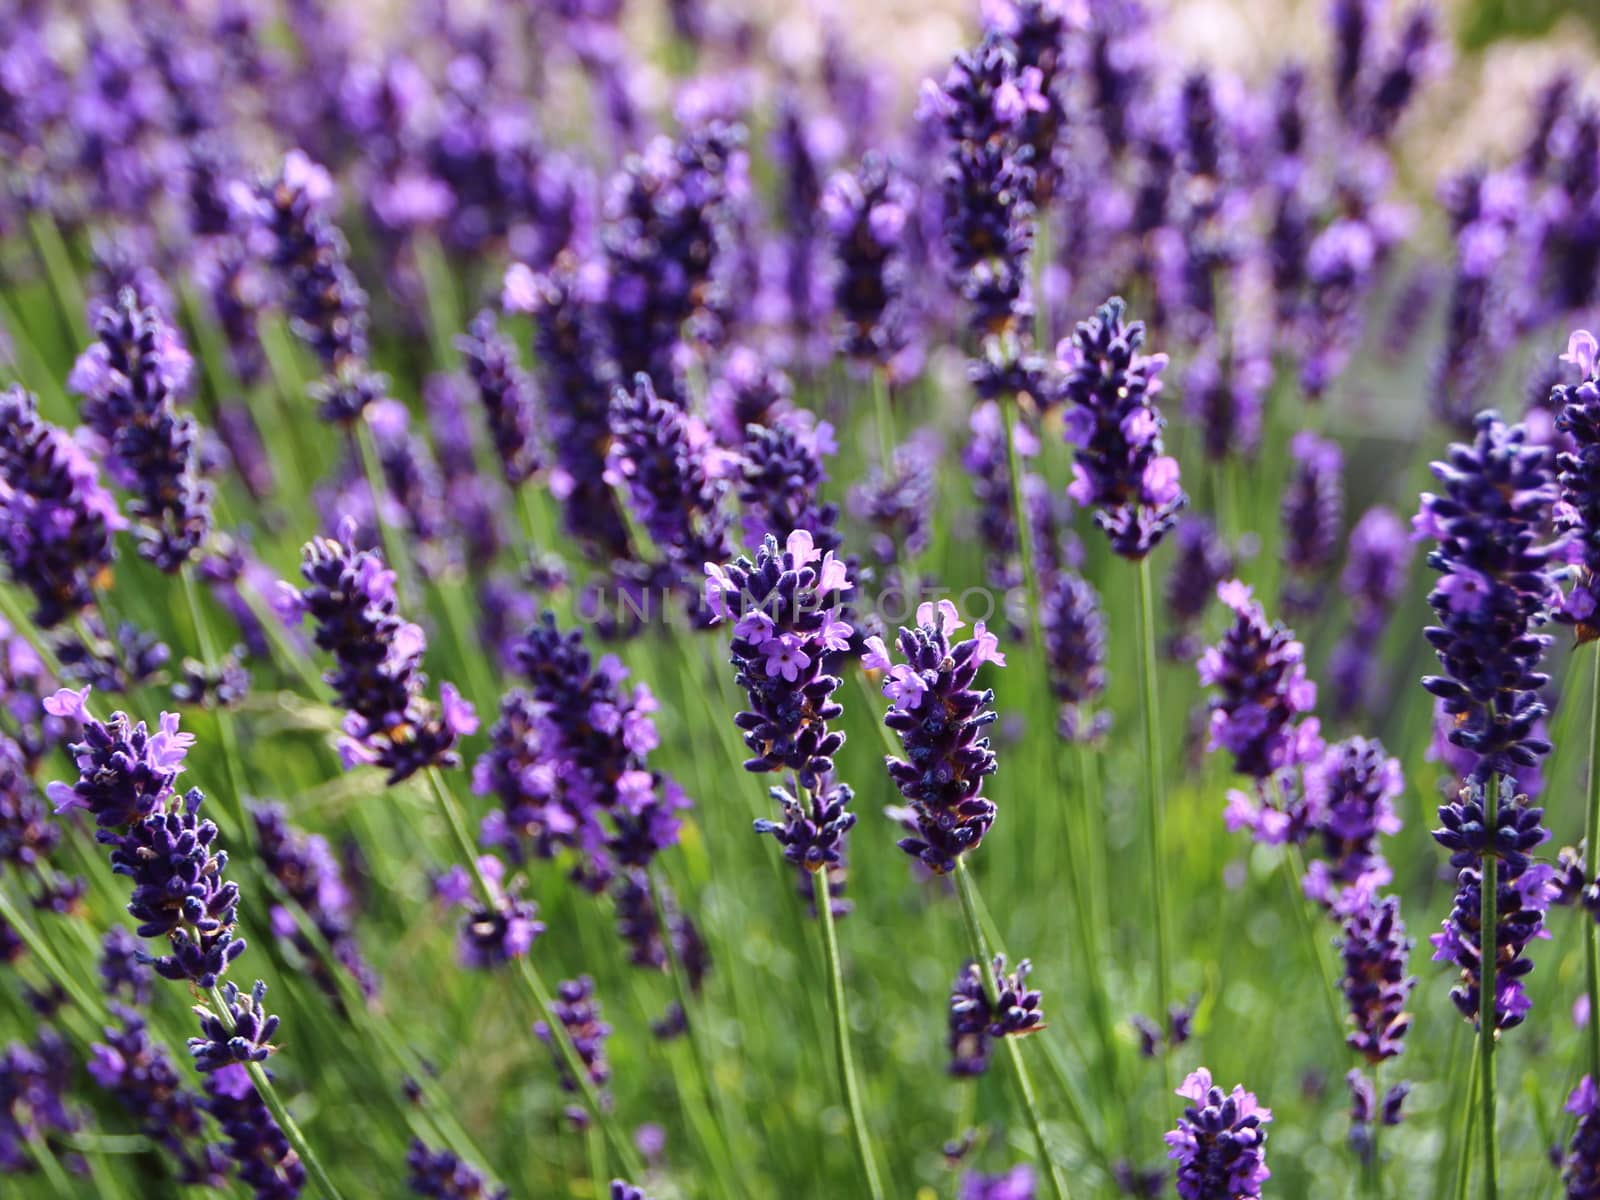 Lavender Flower Summer Field in Perspective Closeup by HoleInTheBox